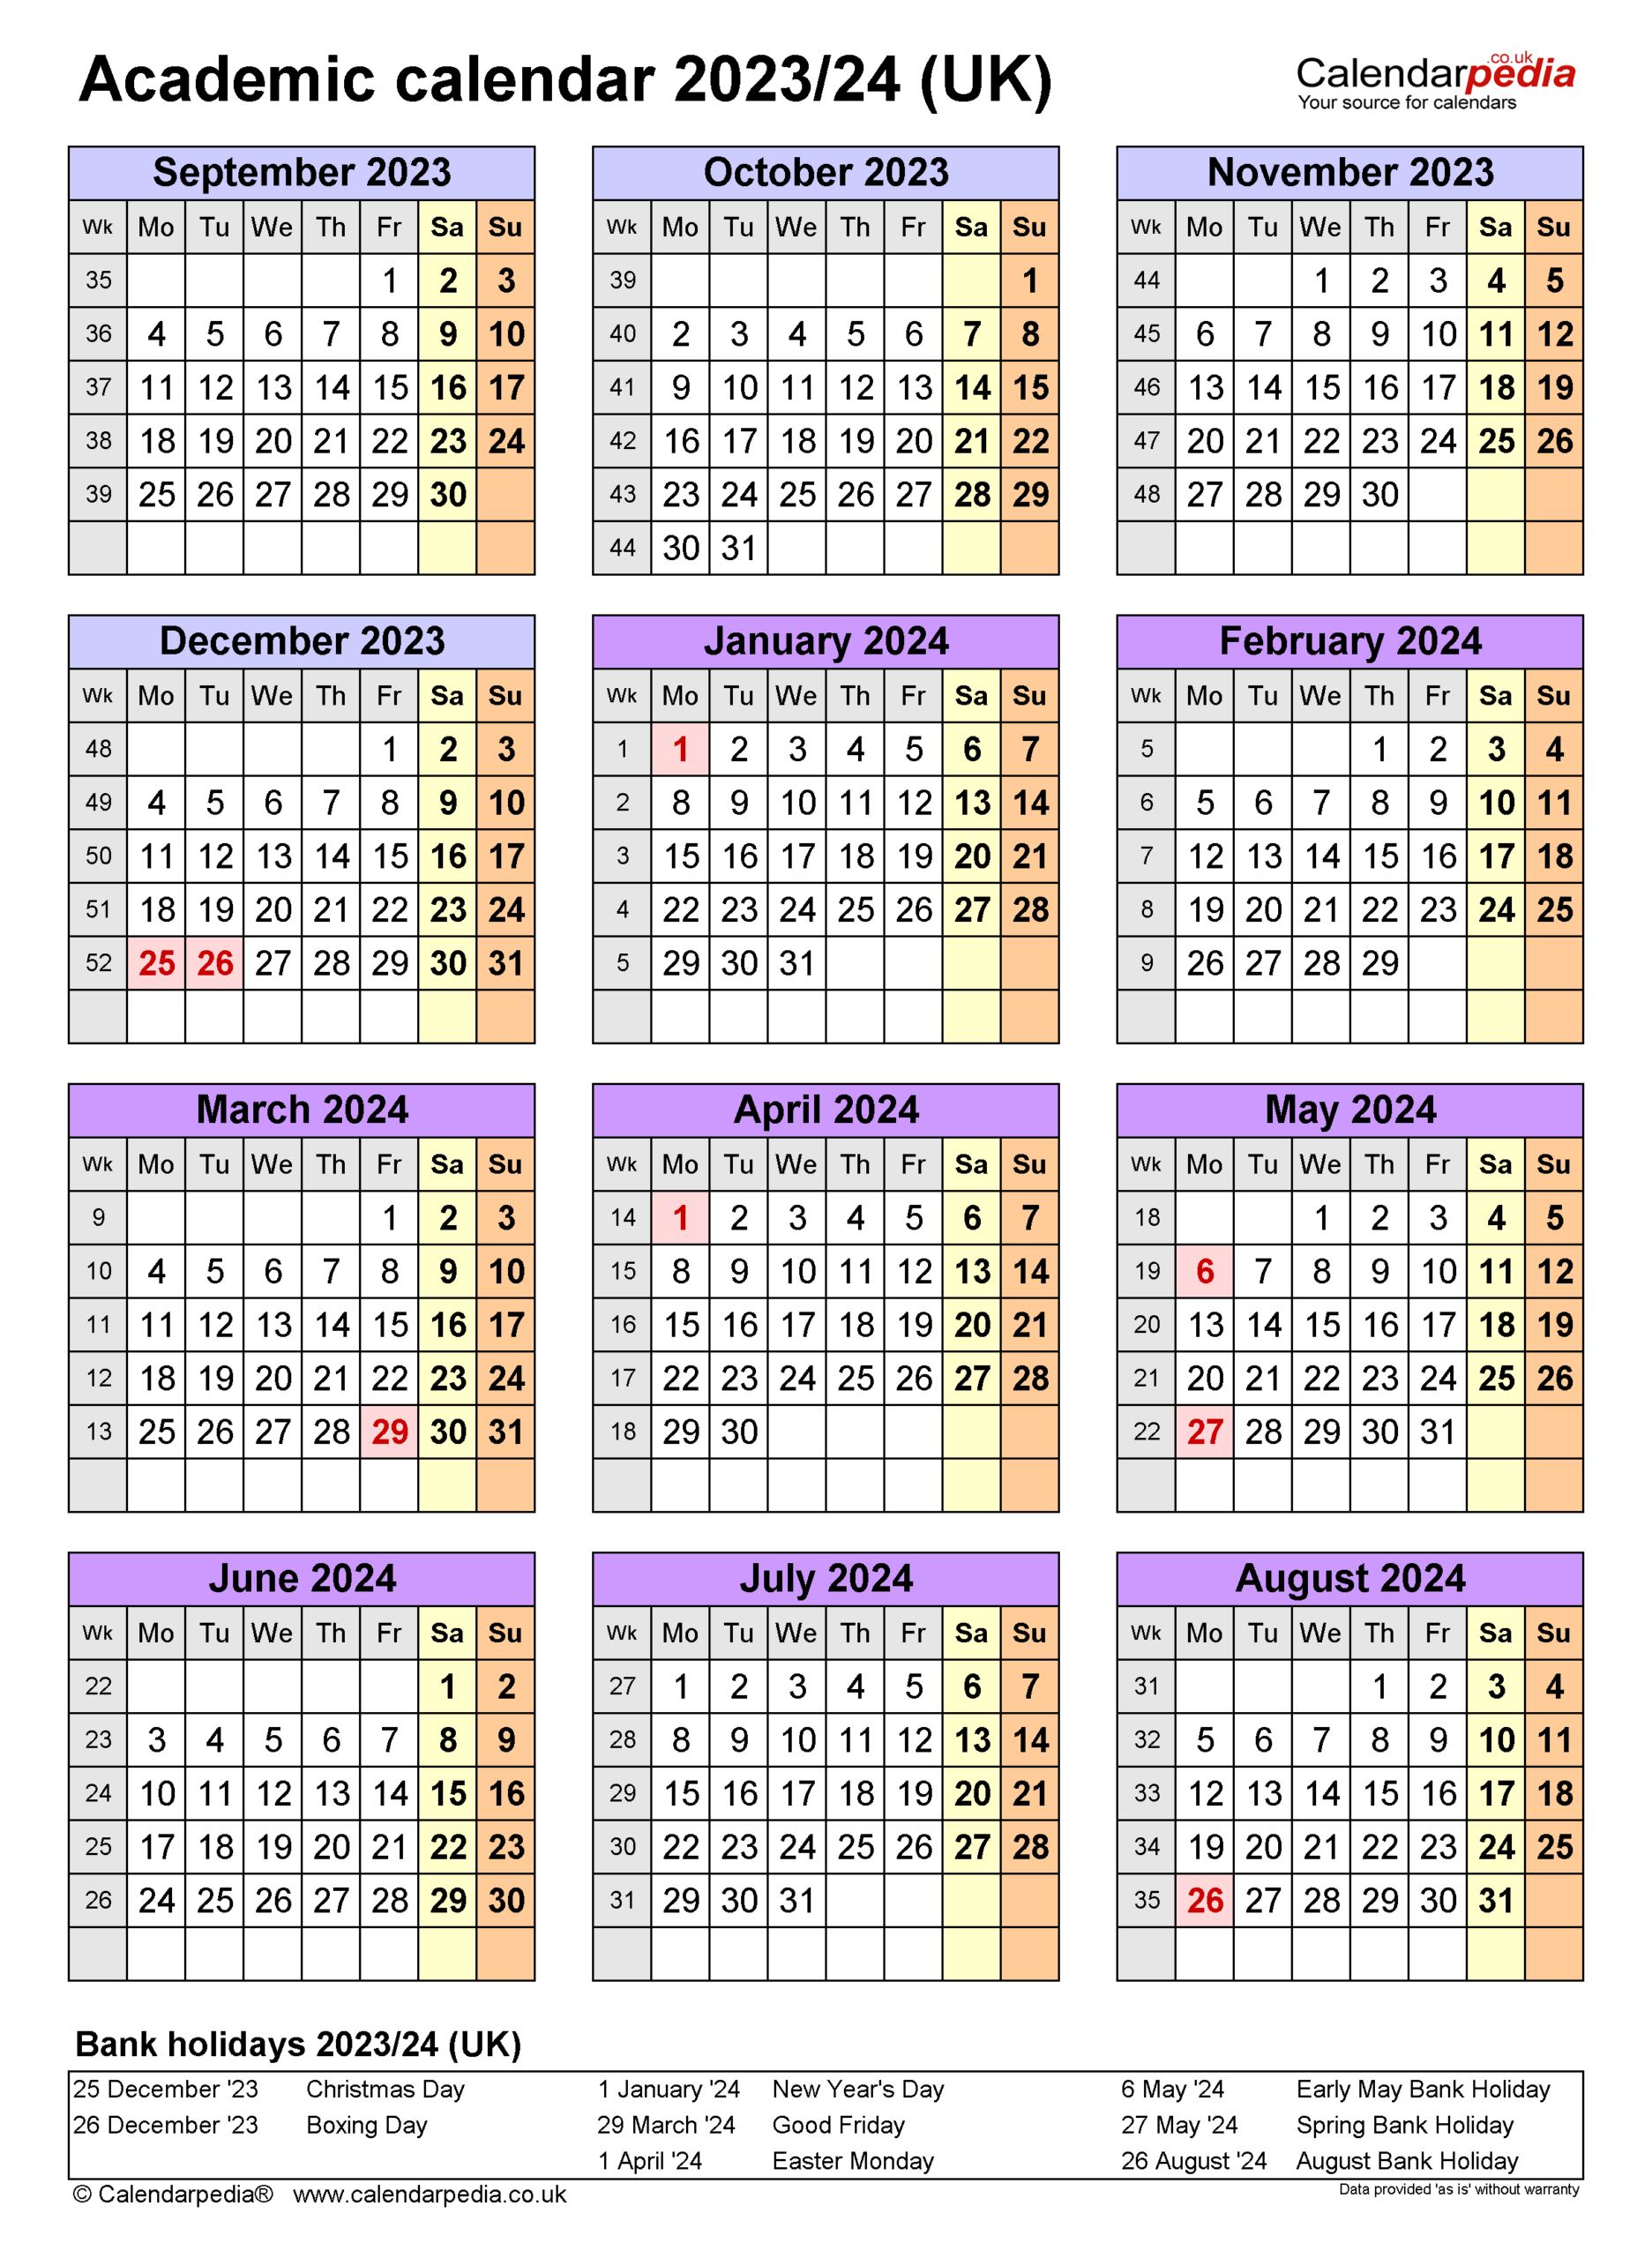 Academic Calendars 2023/24 Uk - Free Printable Excel Templates-2021 Calendar 2022 Printable Uk